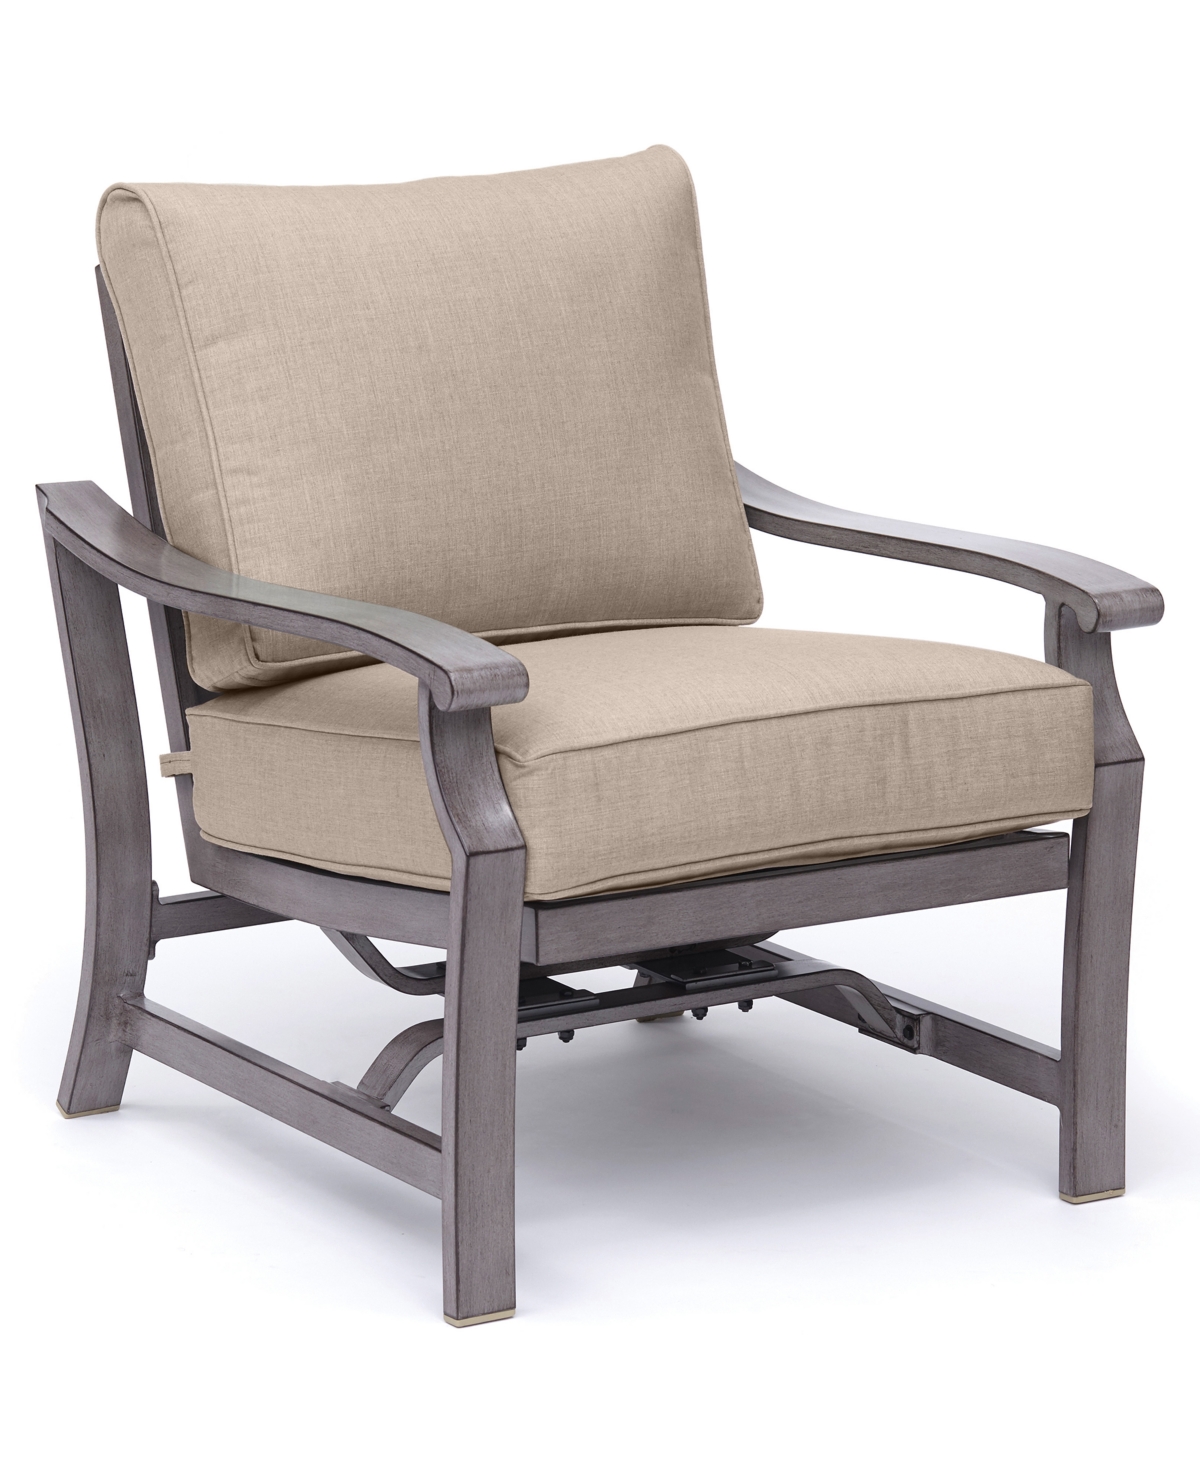 Agio Tara Aluminum Outdoor Rocker Chair, Created For Macy's In Outdura Remy Pebble